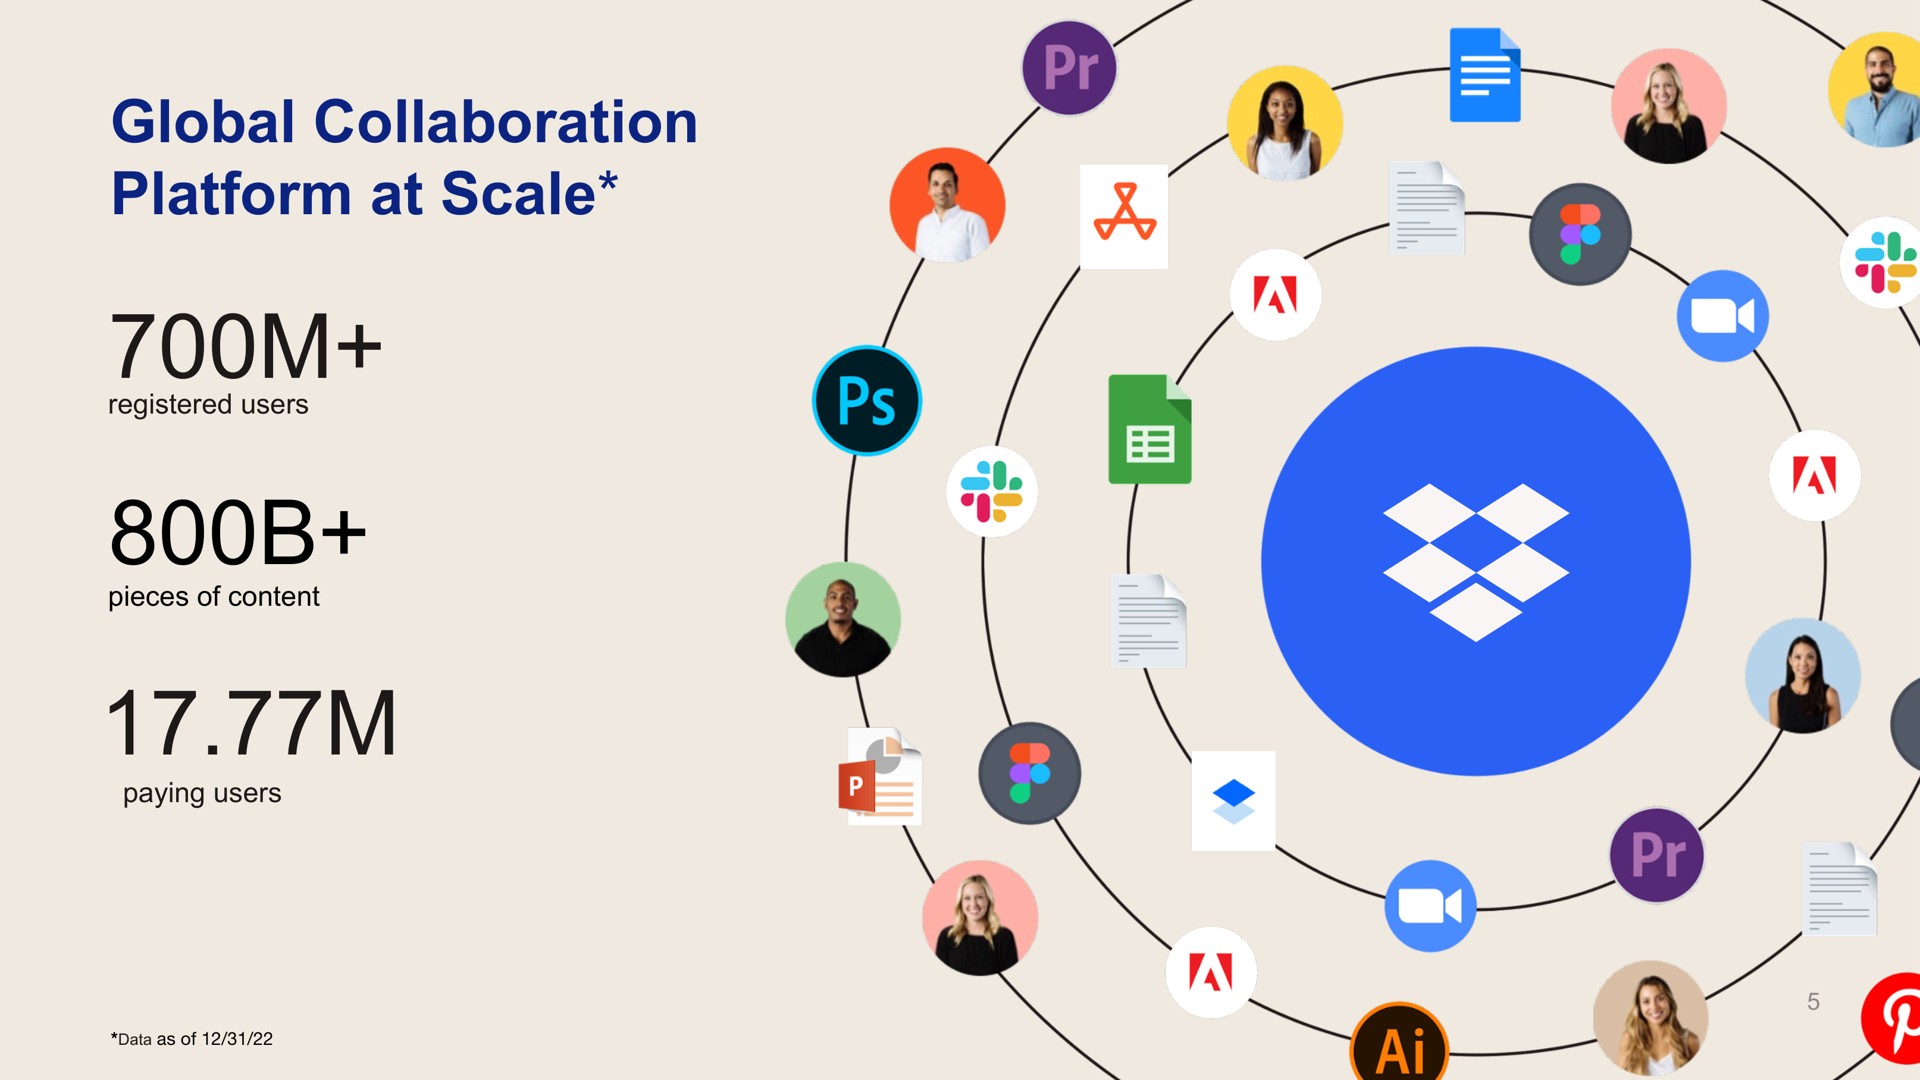 global collaboration platform at scale loom | Dropbox